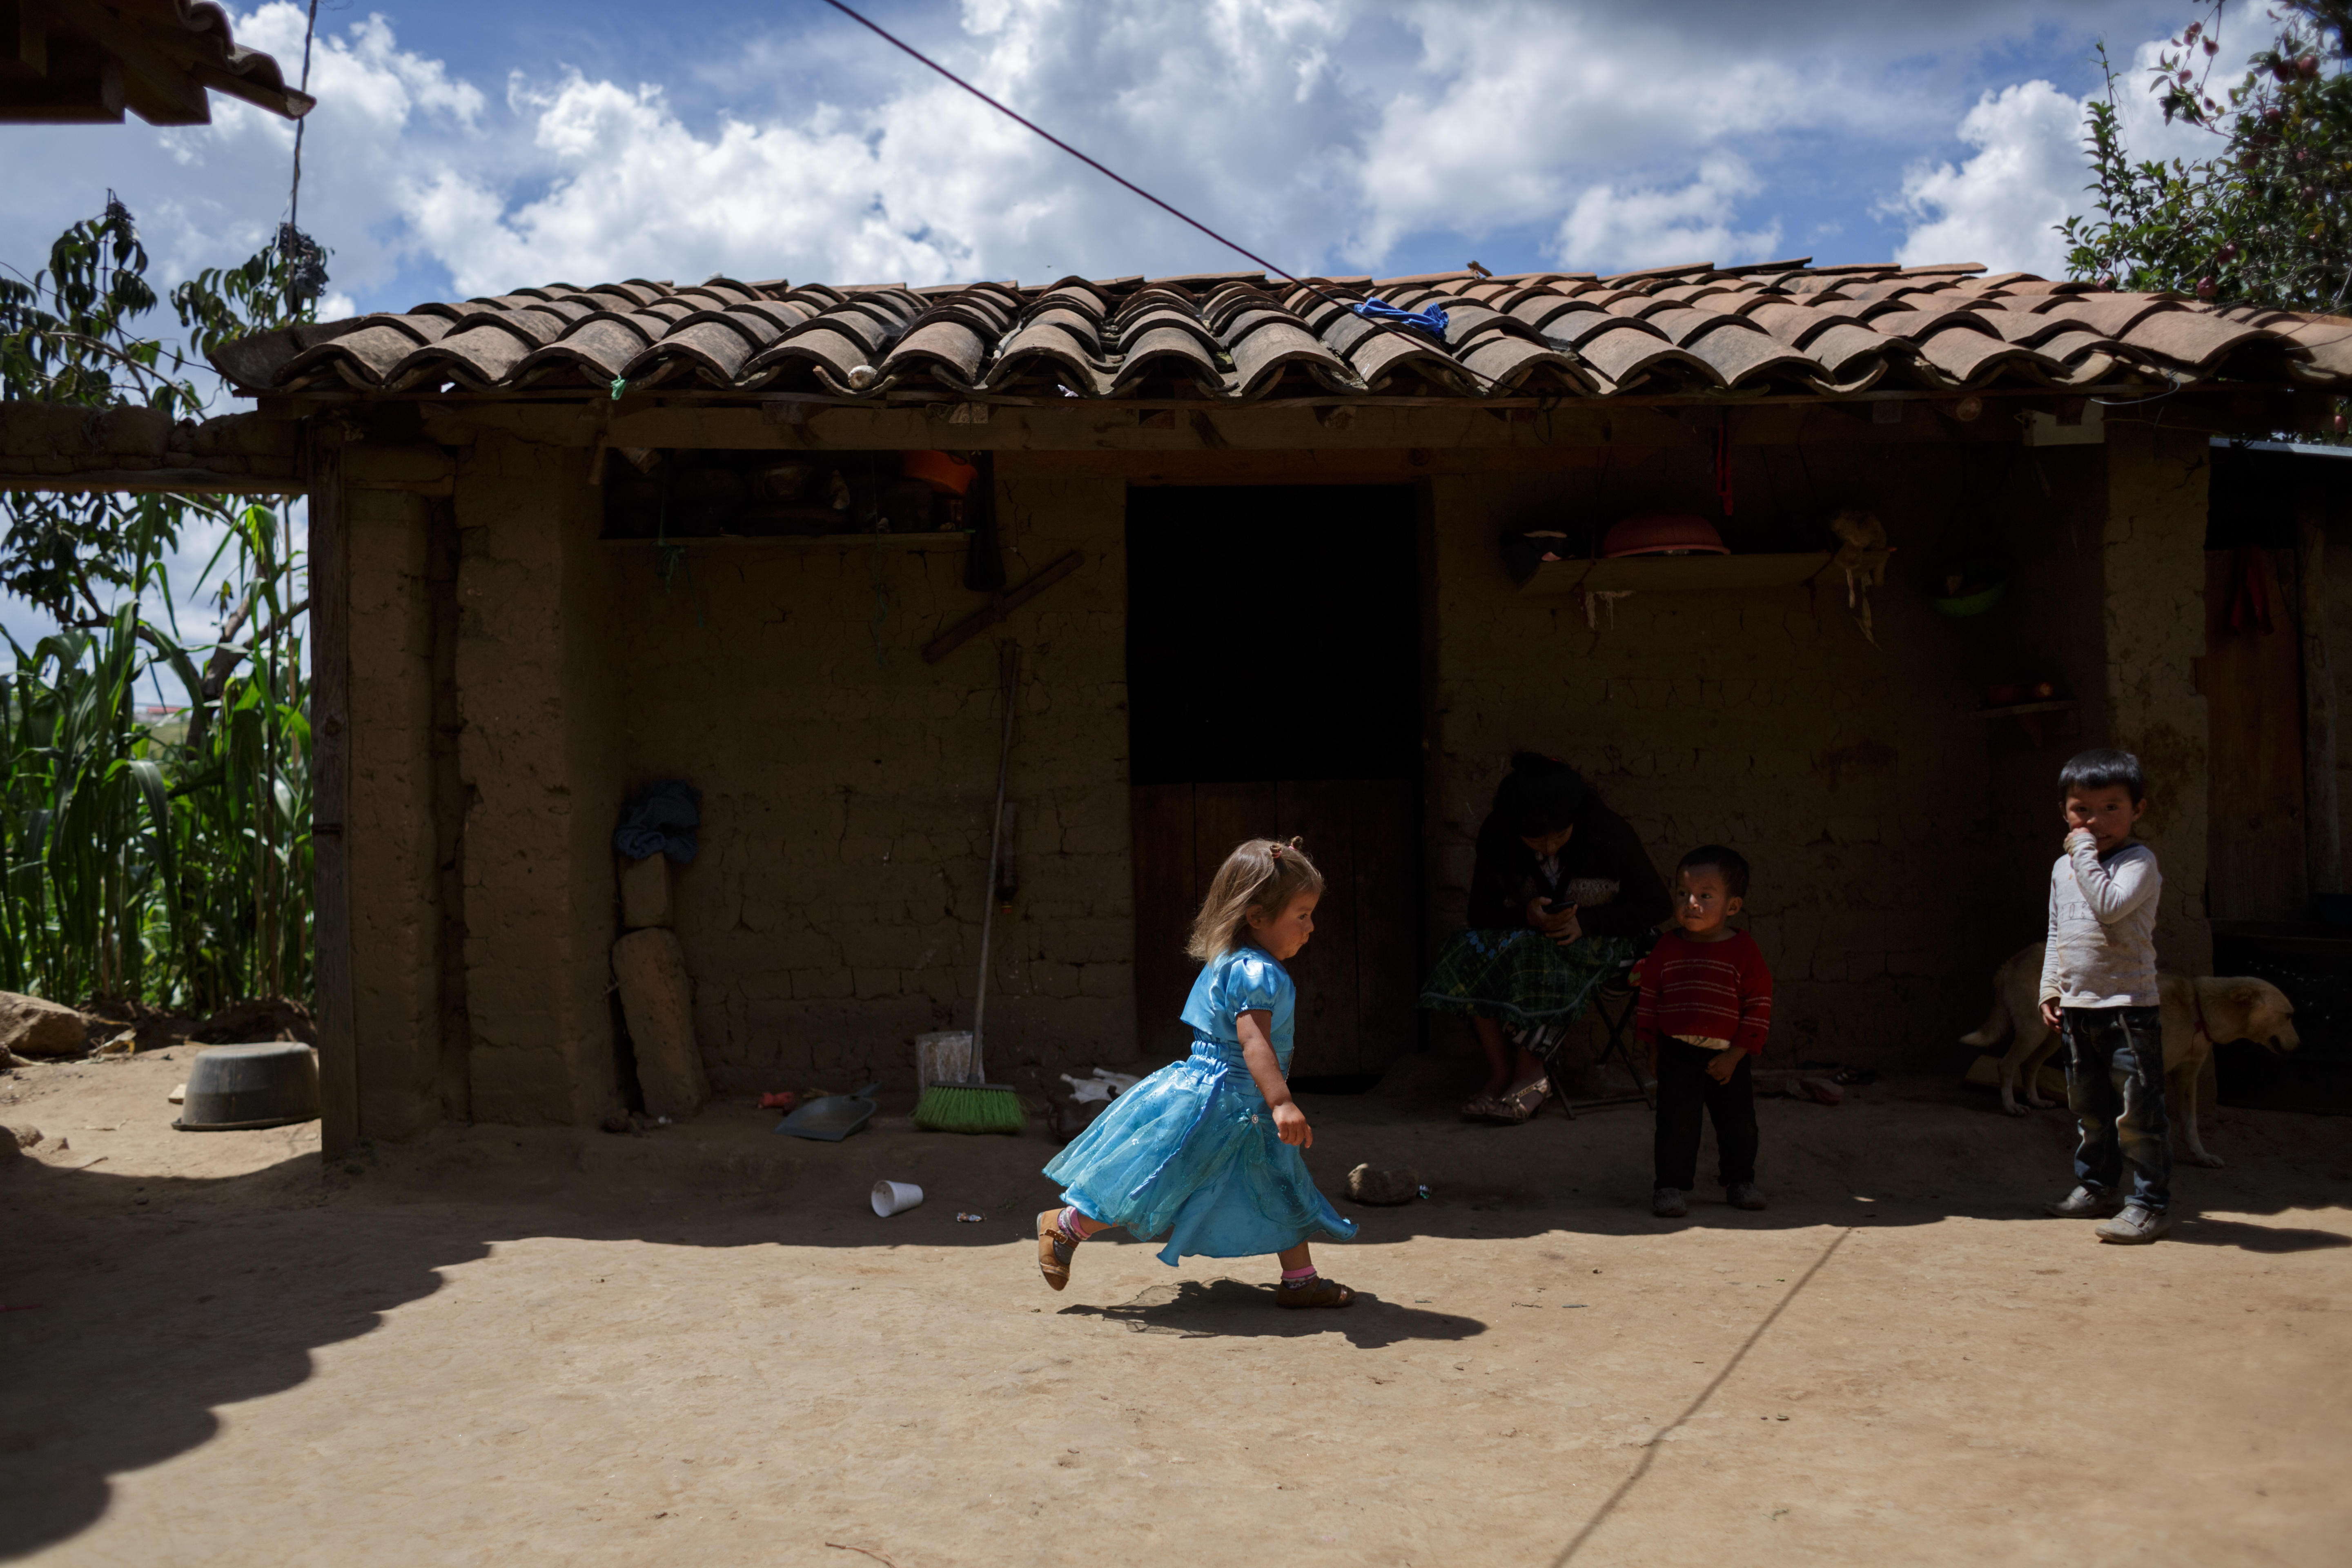 Children standing outside an informal dwelling